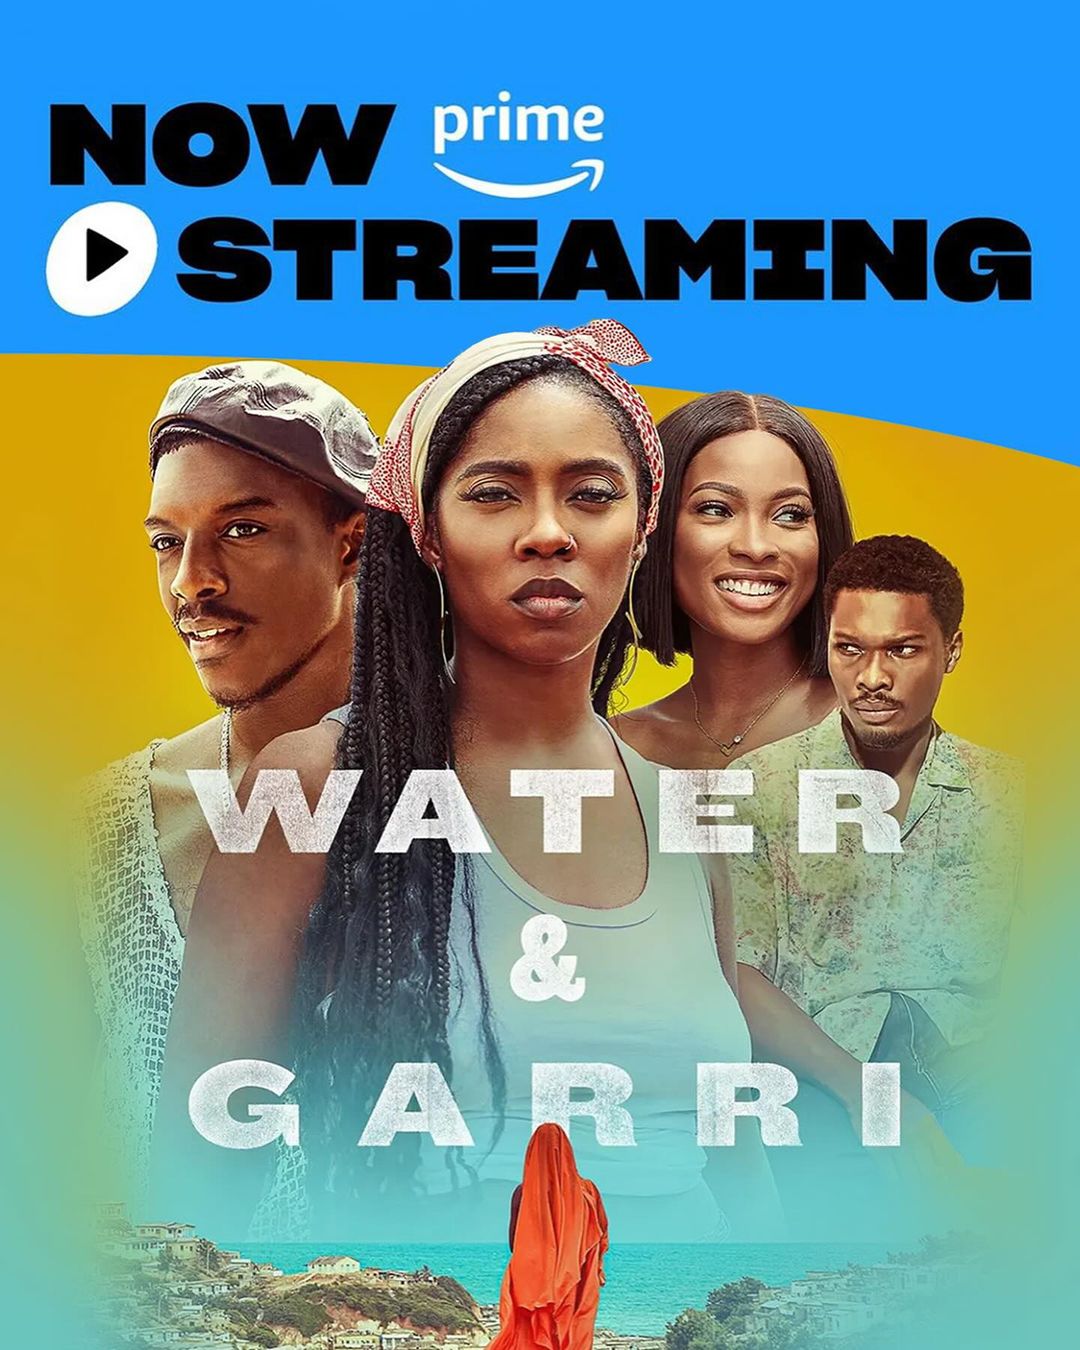 Tiwa Savage reveals 'Water and Garri' movie was inspired while drunk